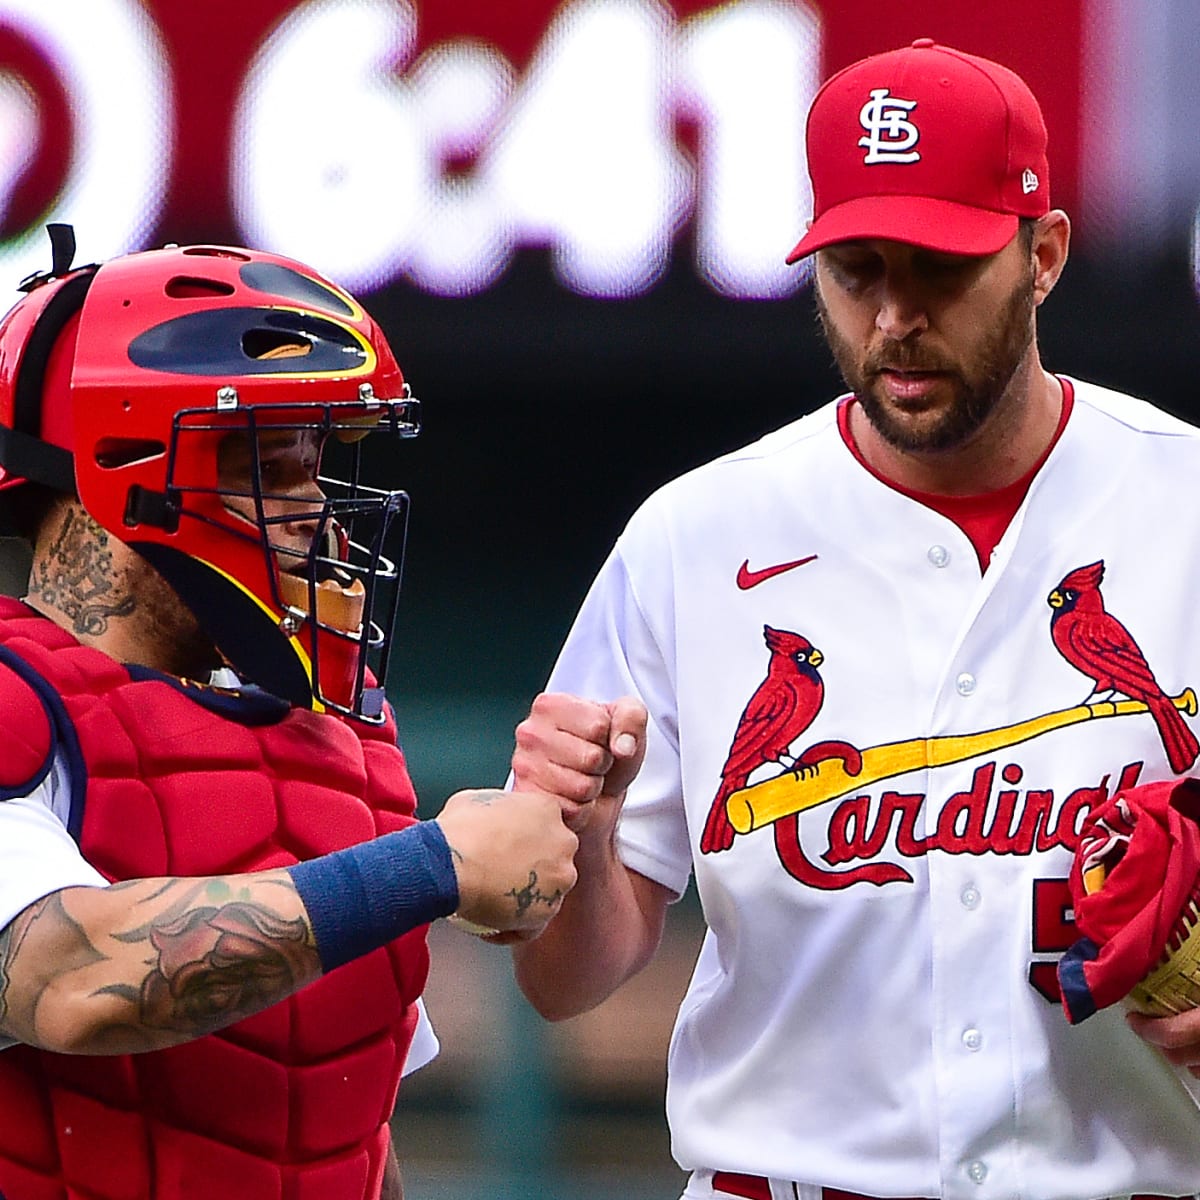 Wainwright, Molina make history in Cardinals best win of season